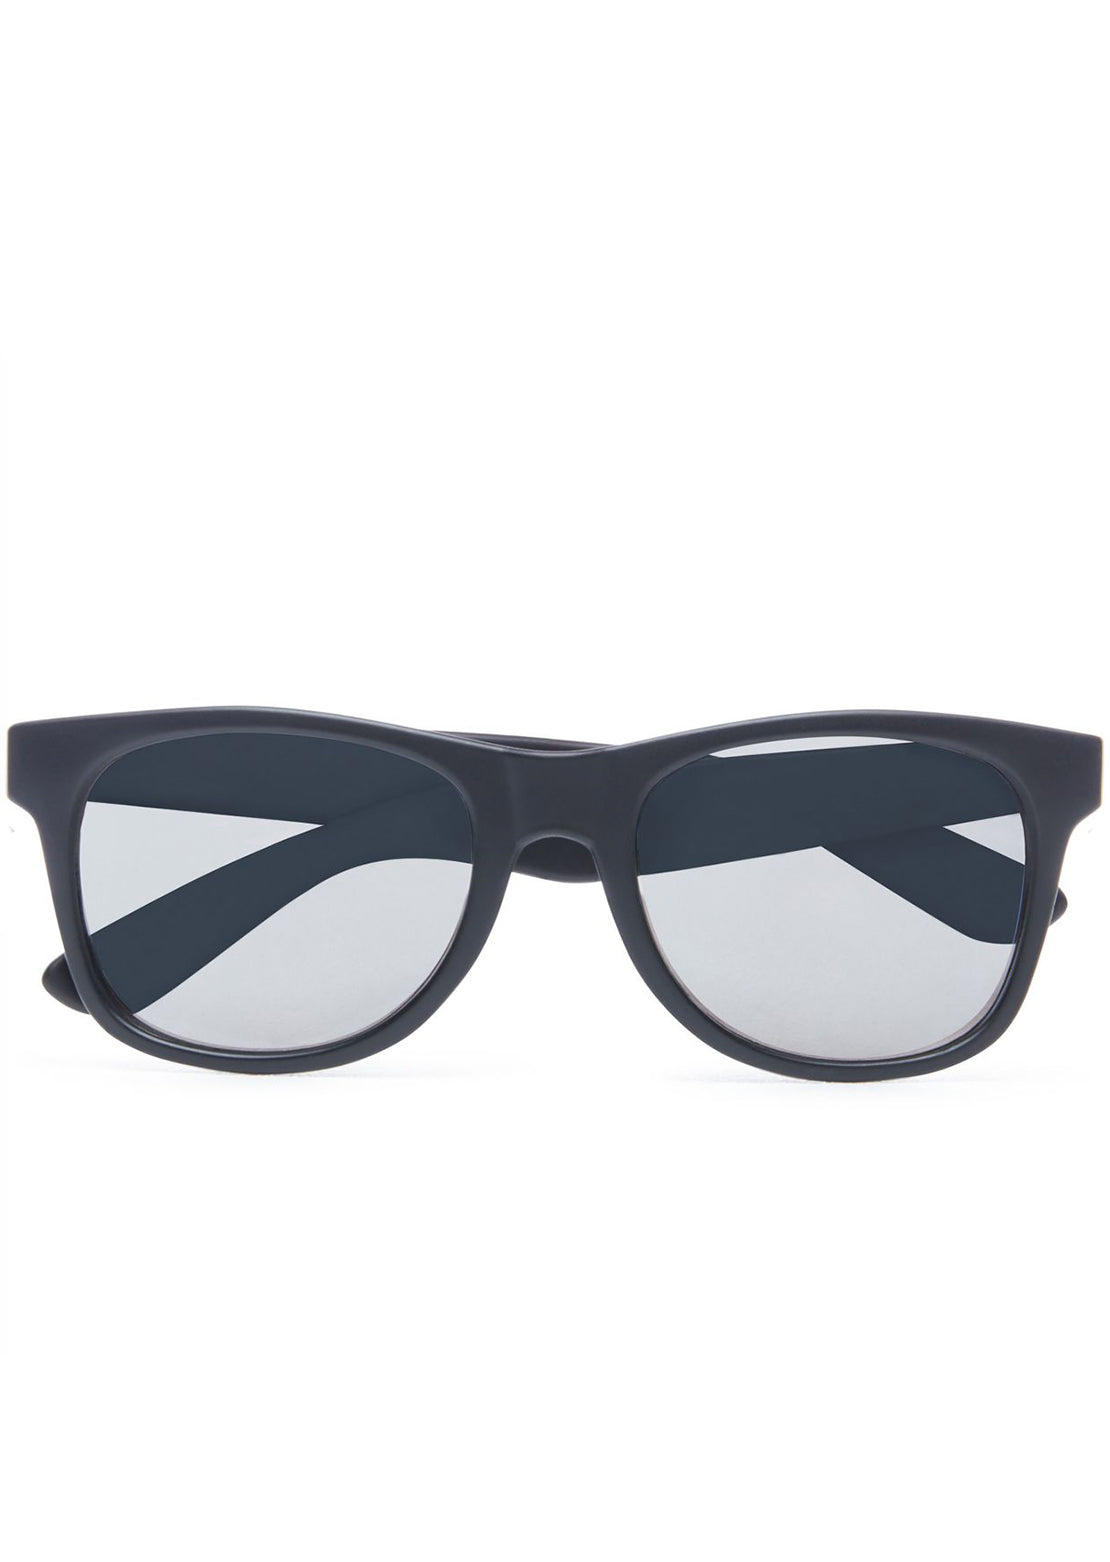 Vans Spicoli 4 Shades Sunglasses Matte Black/Silver Mirror